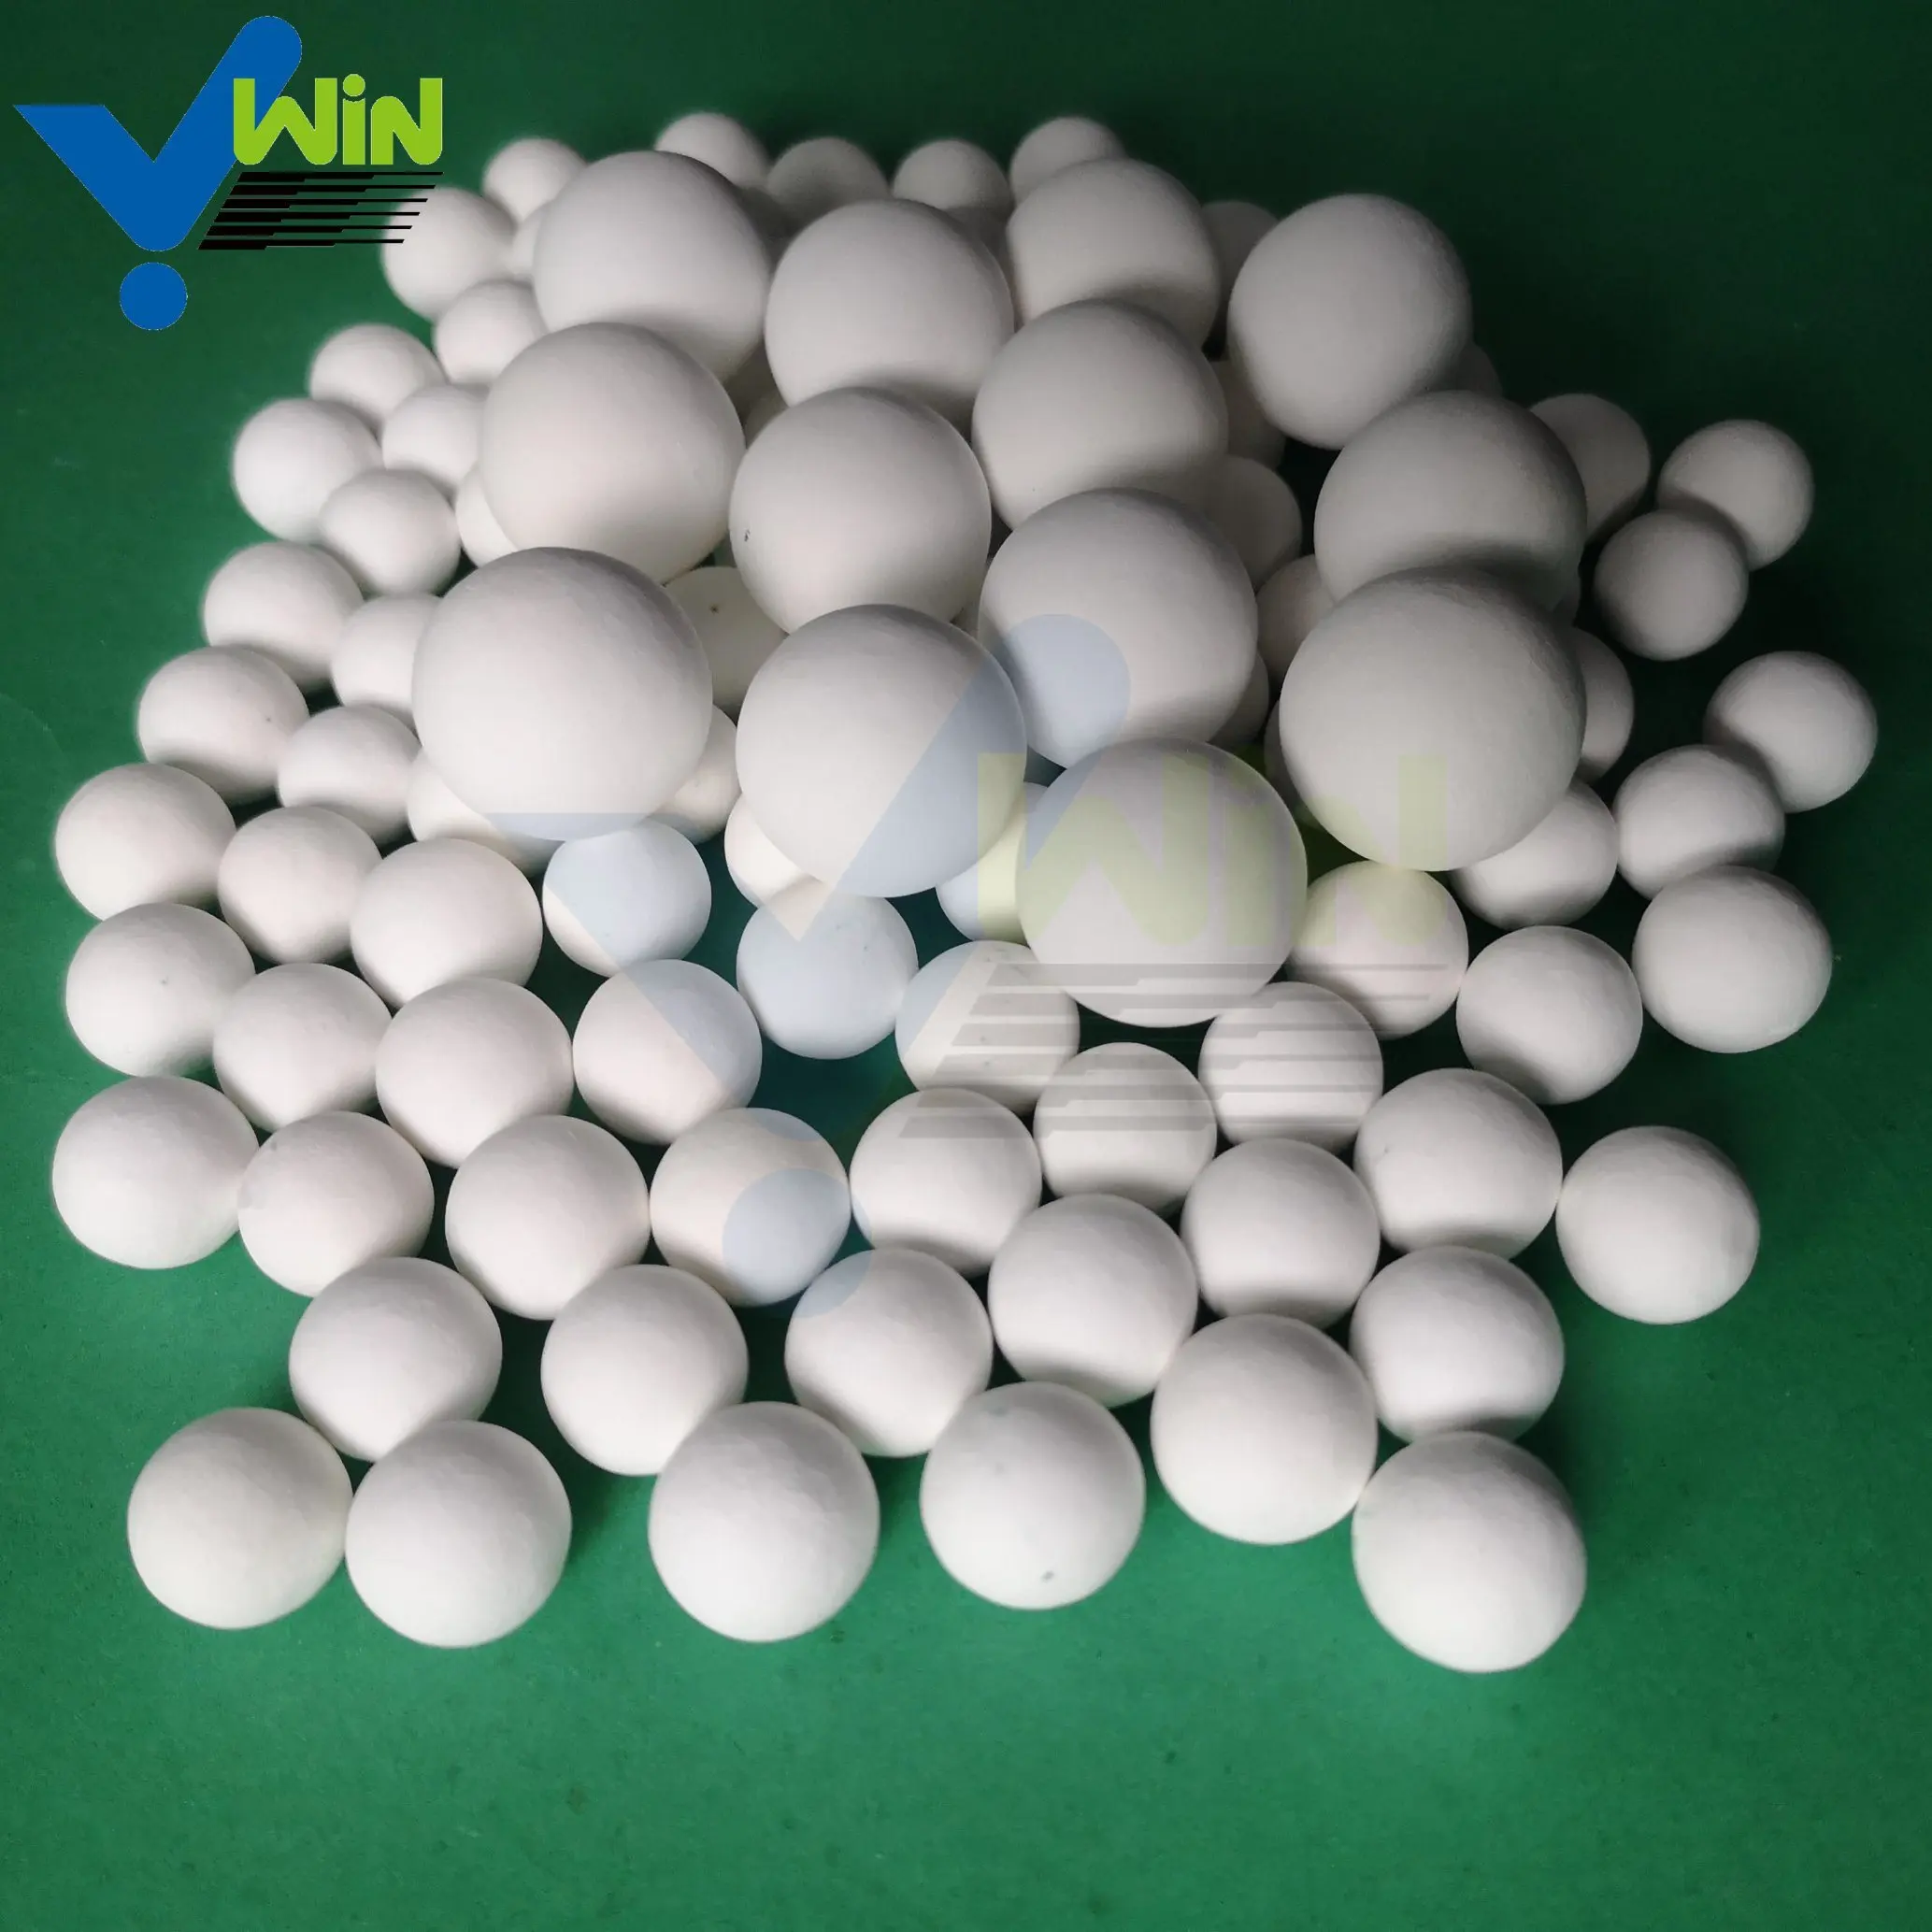 Zibo Win-Ceramic manufacturer produces support media inert alumina ceramic balls for the petrochemical industry